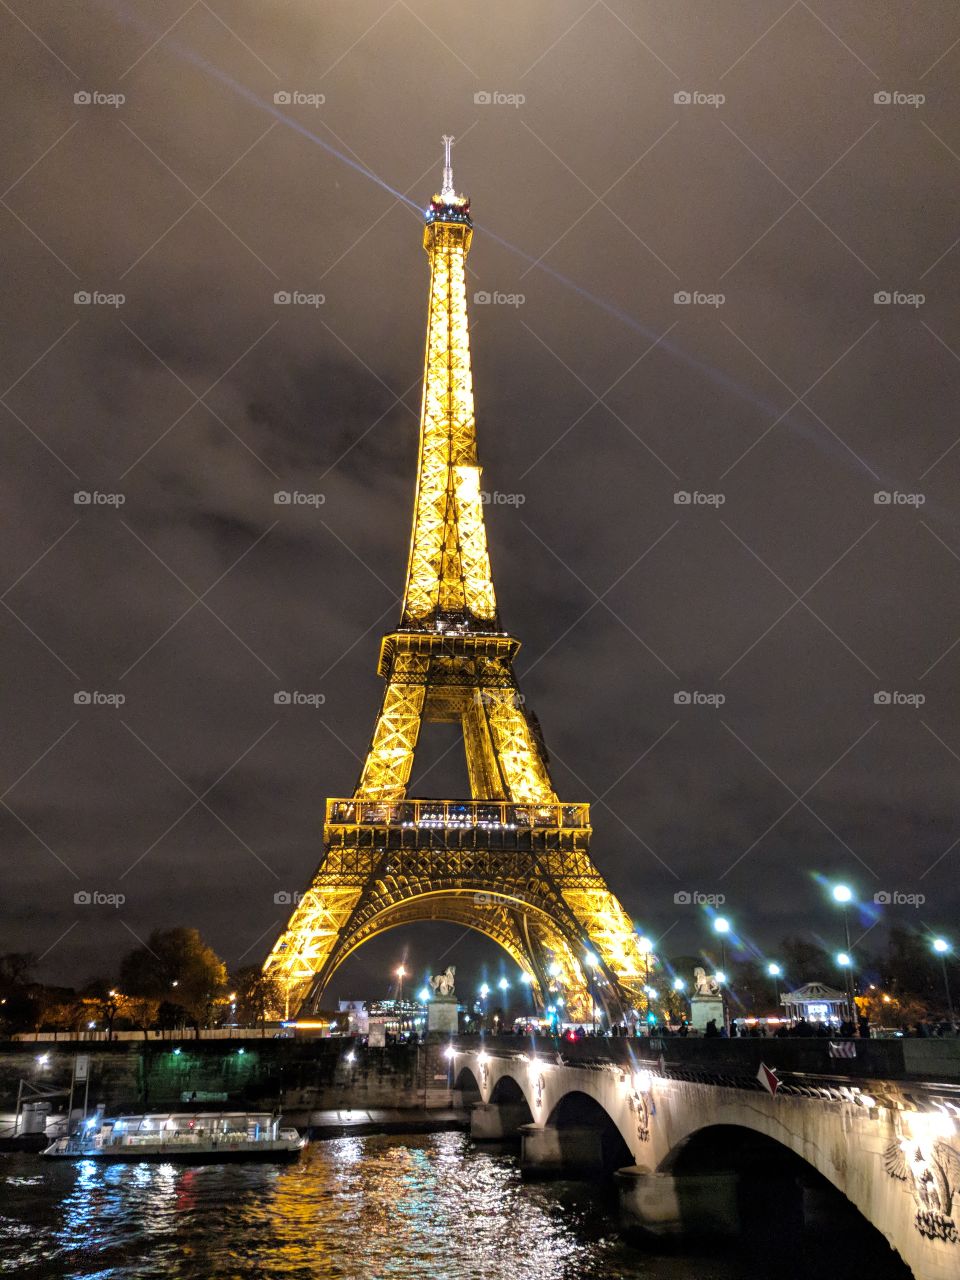 Eiffel Tower Paris France at night